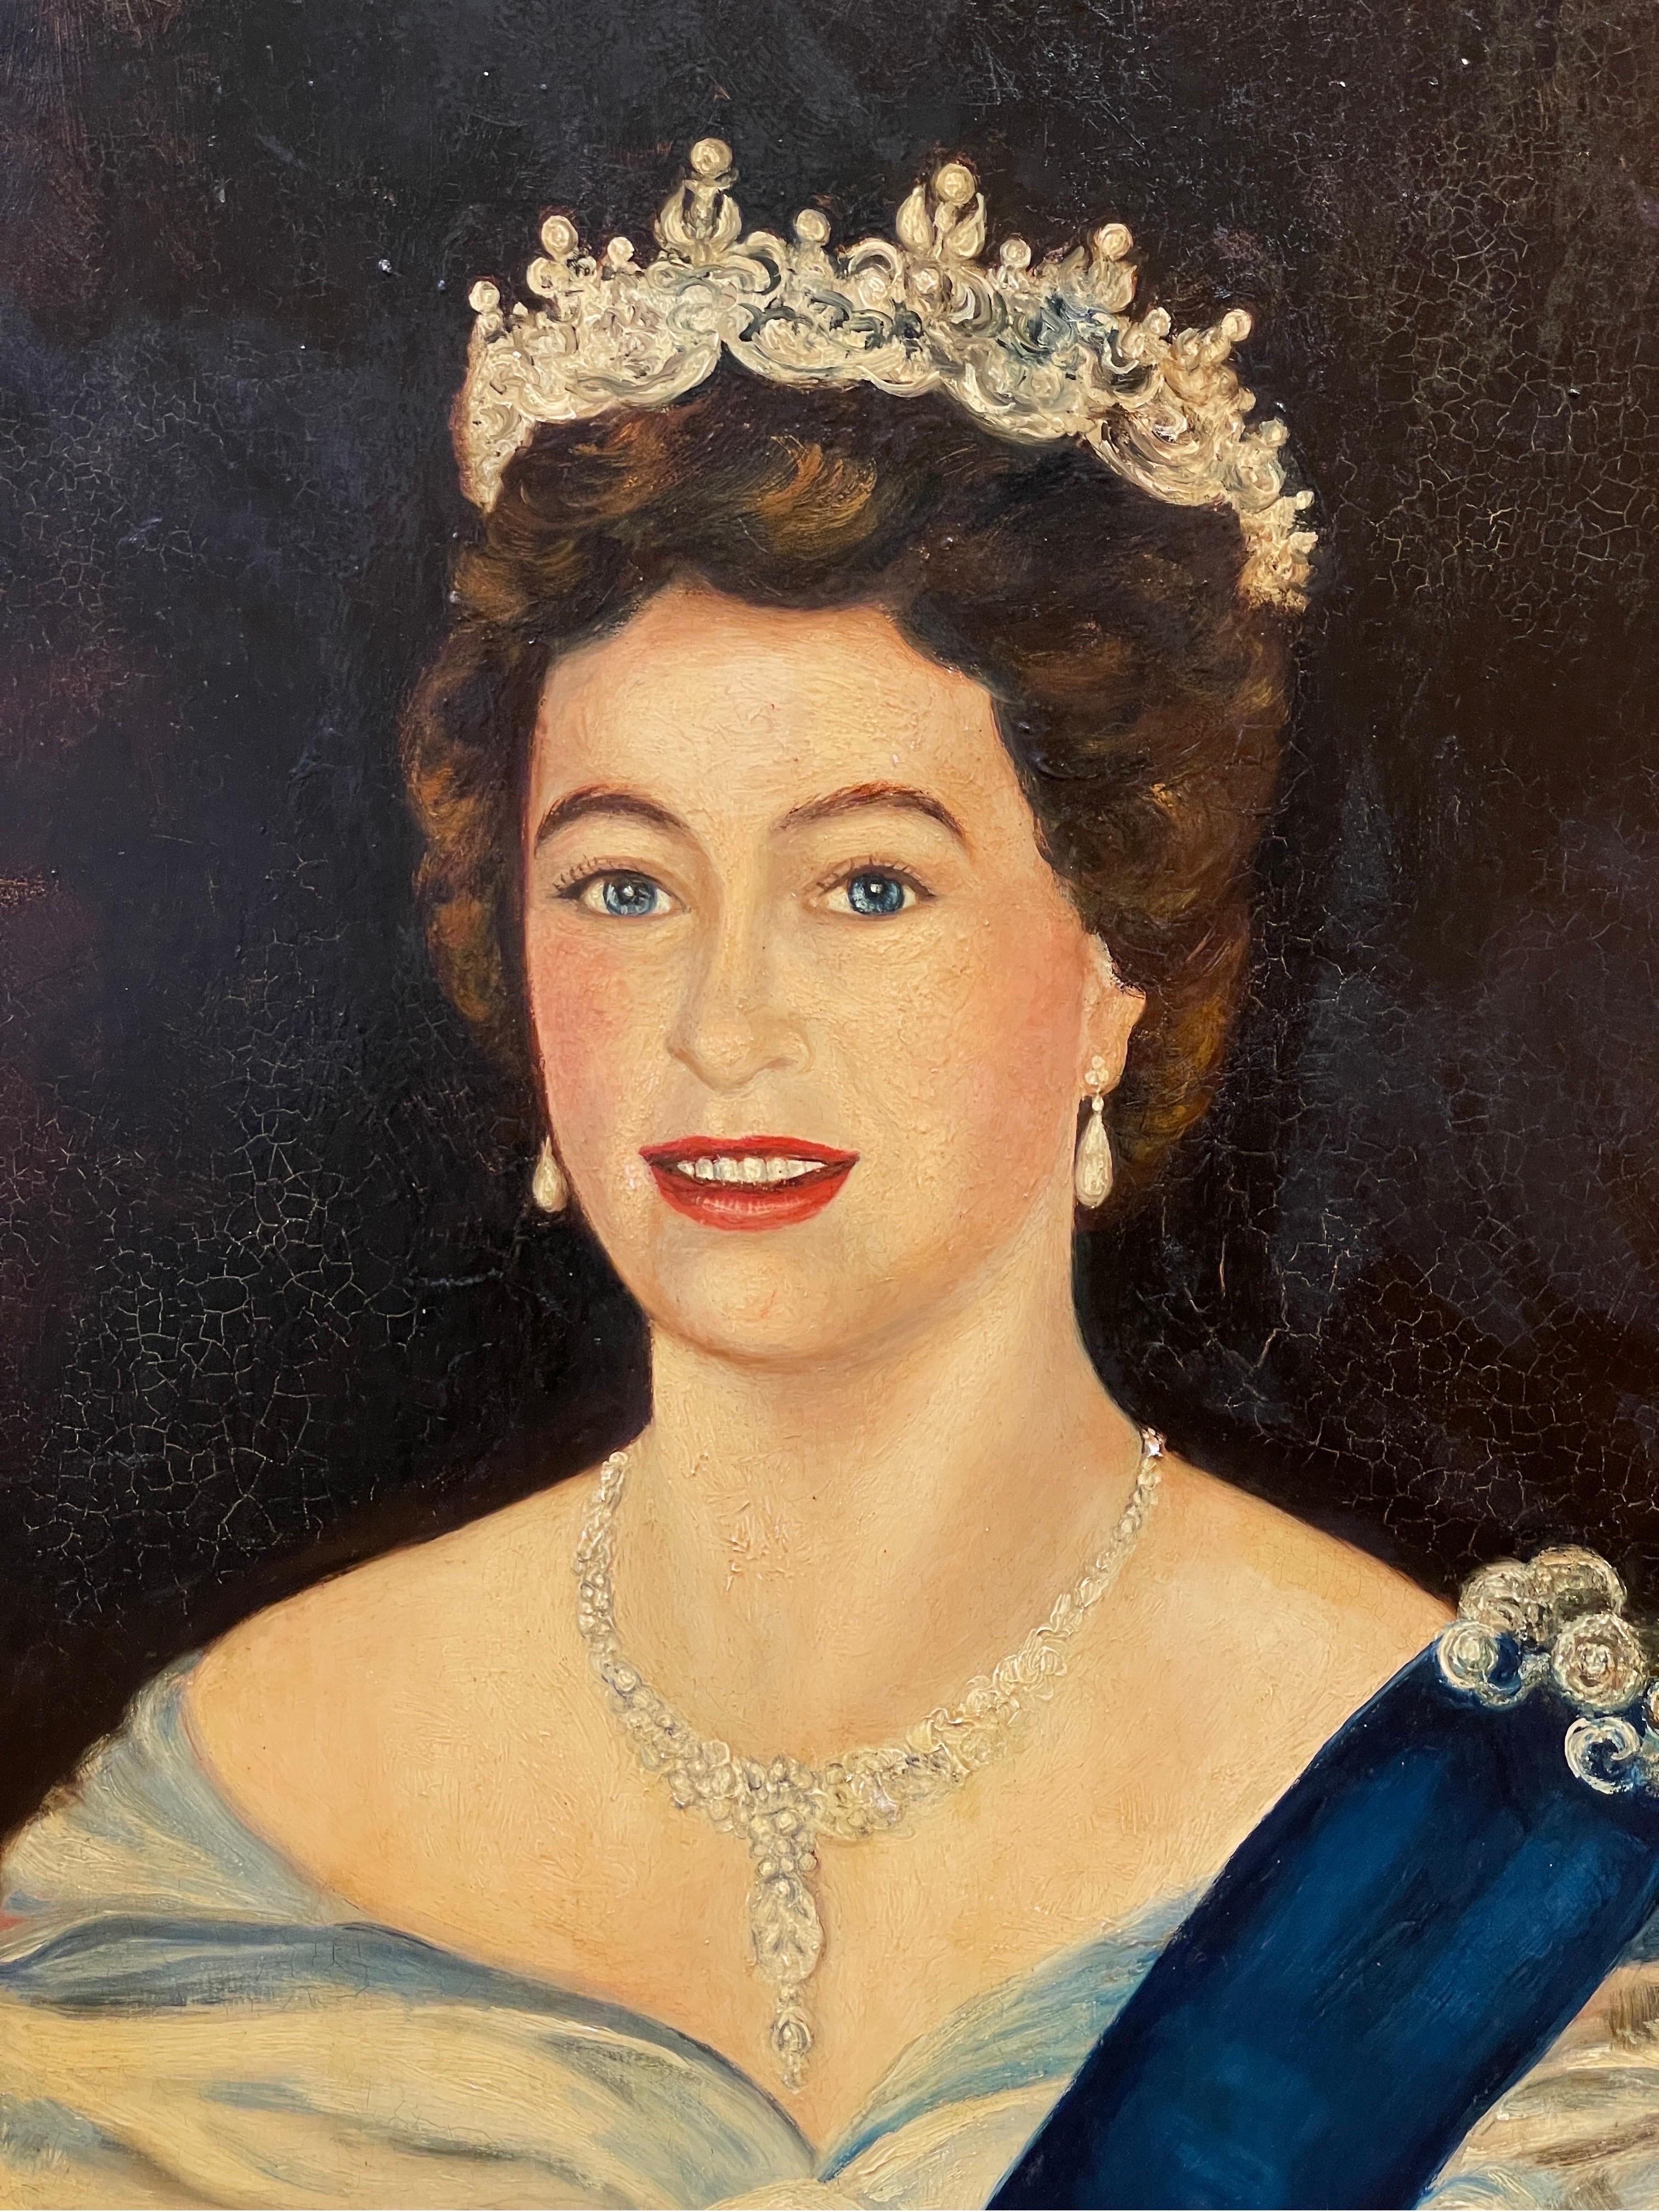 Her Majesty Queen Elizabeth II, Original Oil Painting Portrait 1953 large work - Black Portrait Painting by British Artist